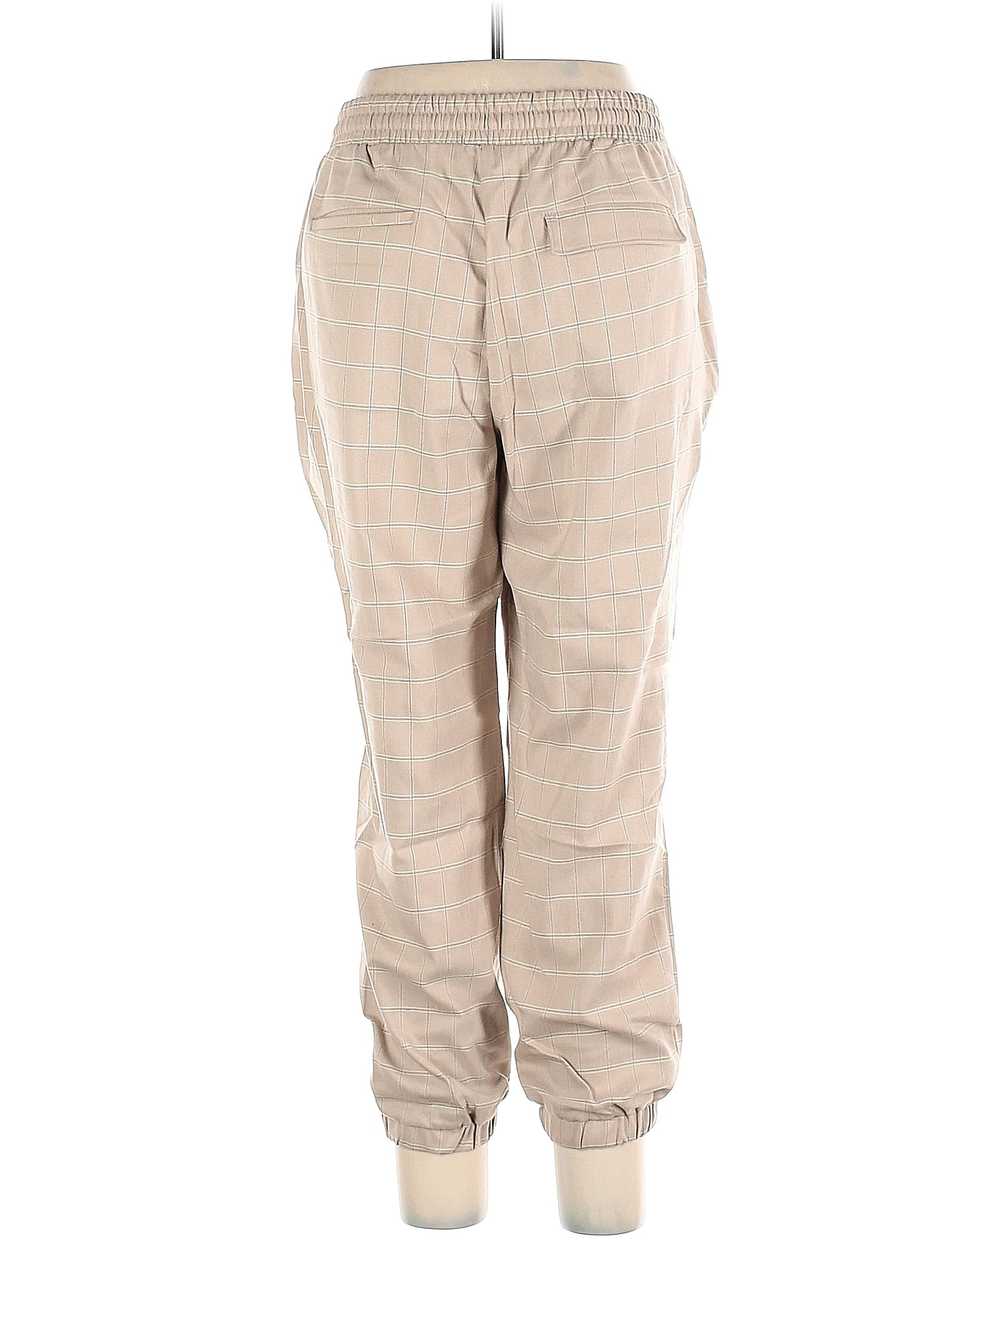 Nine West Women Brown Casual Pants XL - image 2